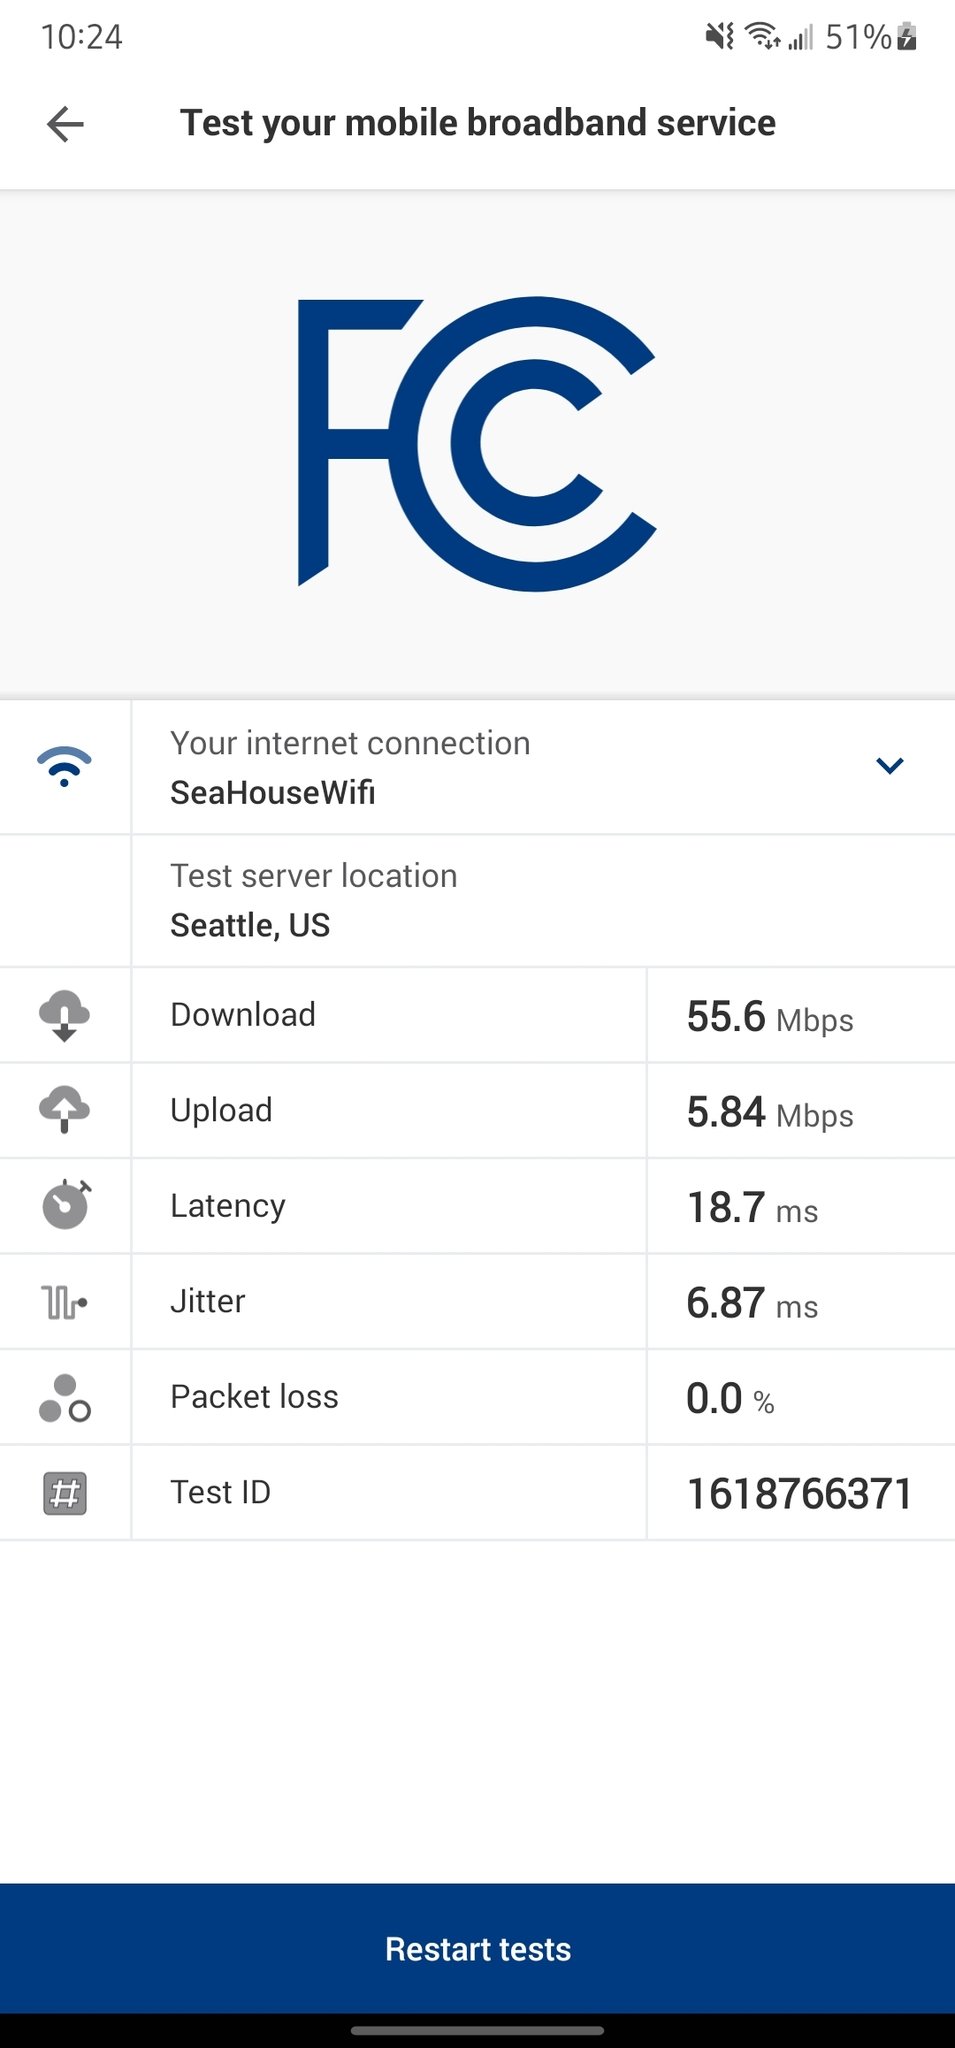 FCC Speed Test App